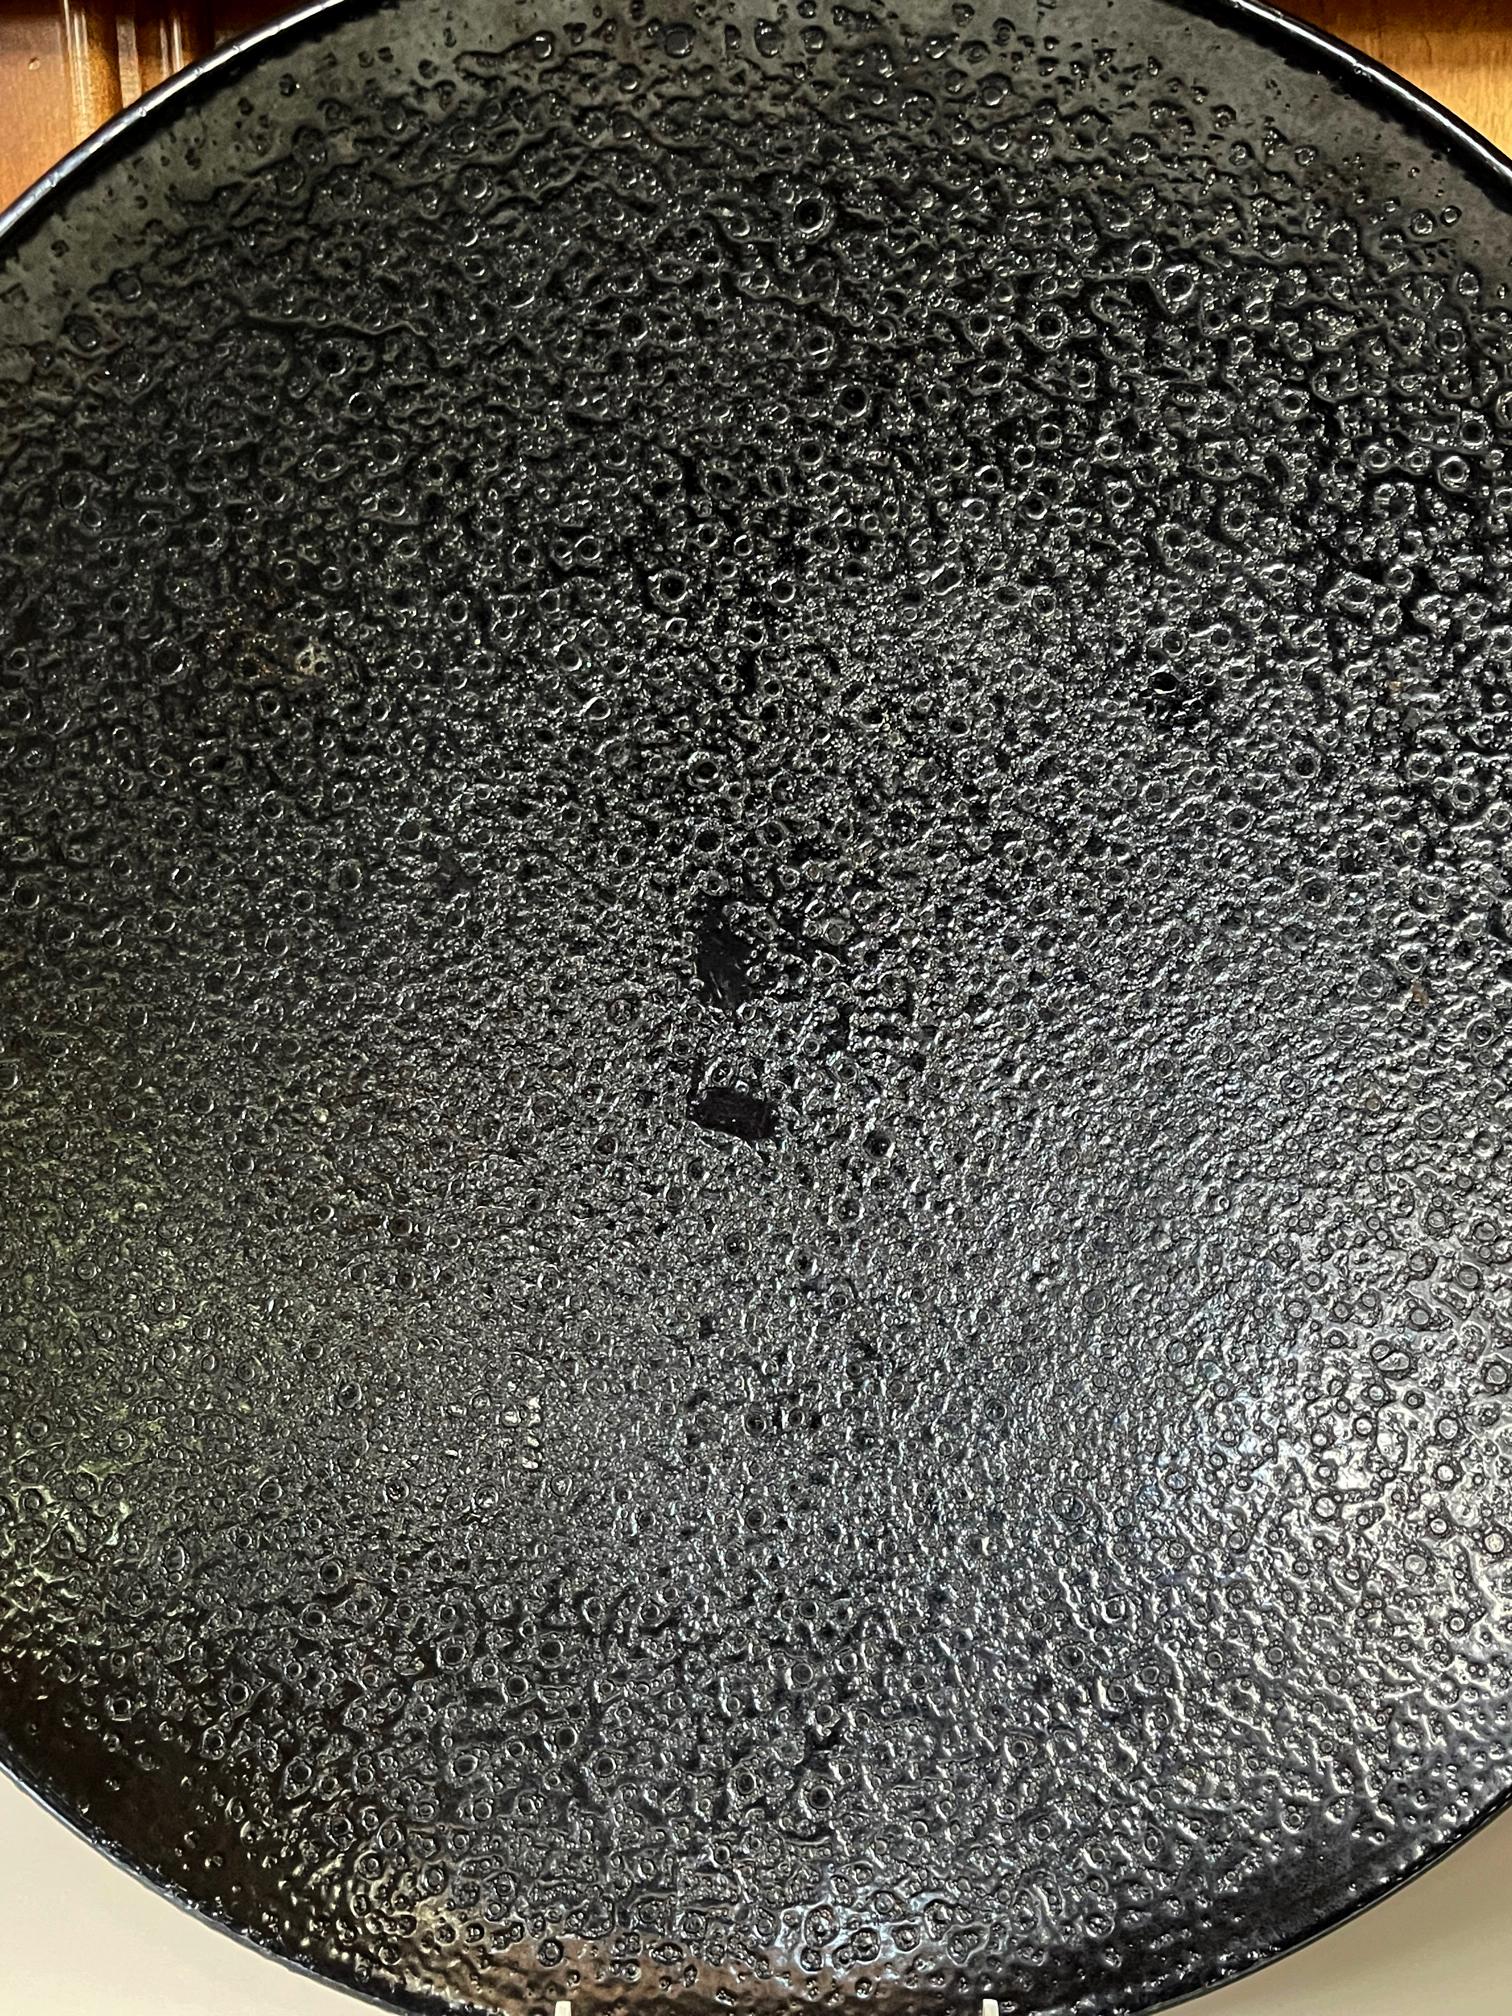 Large Black Ceramic Bowl Centerpiece with Lava Glaze by James Lovera For Sale 4